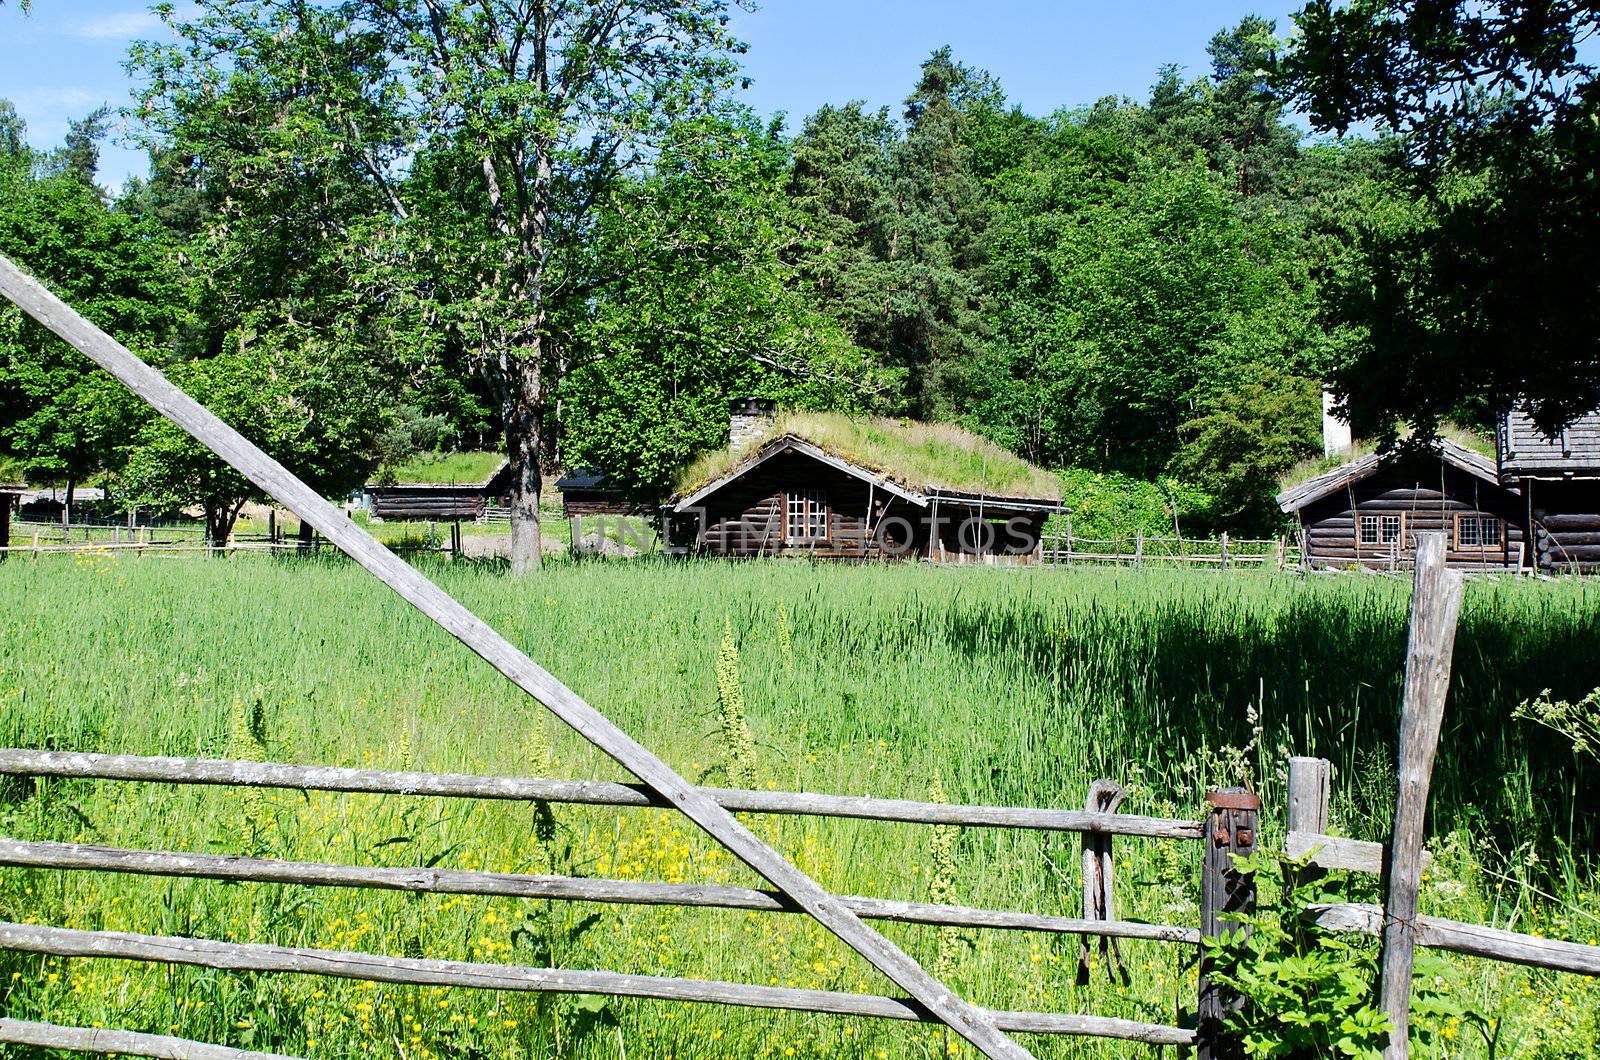 Ancient 18th century Norwegian houses